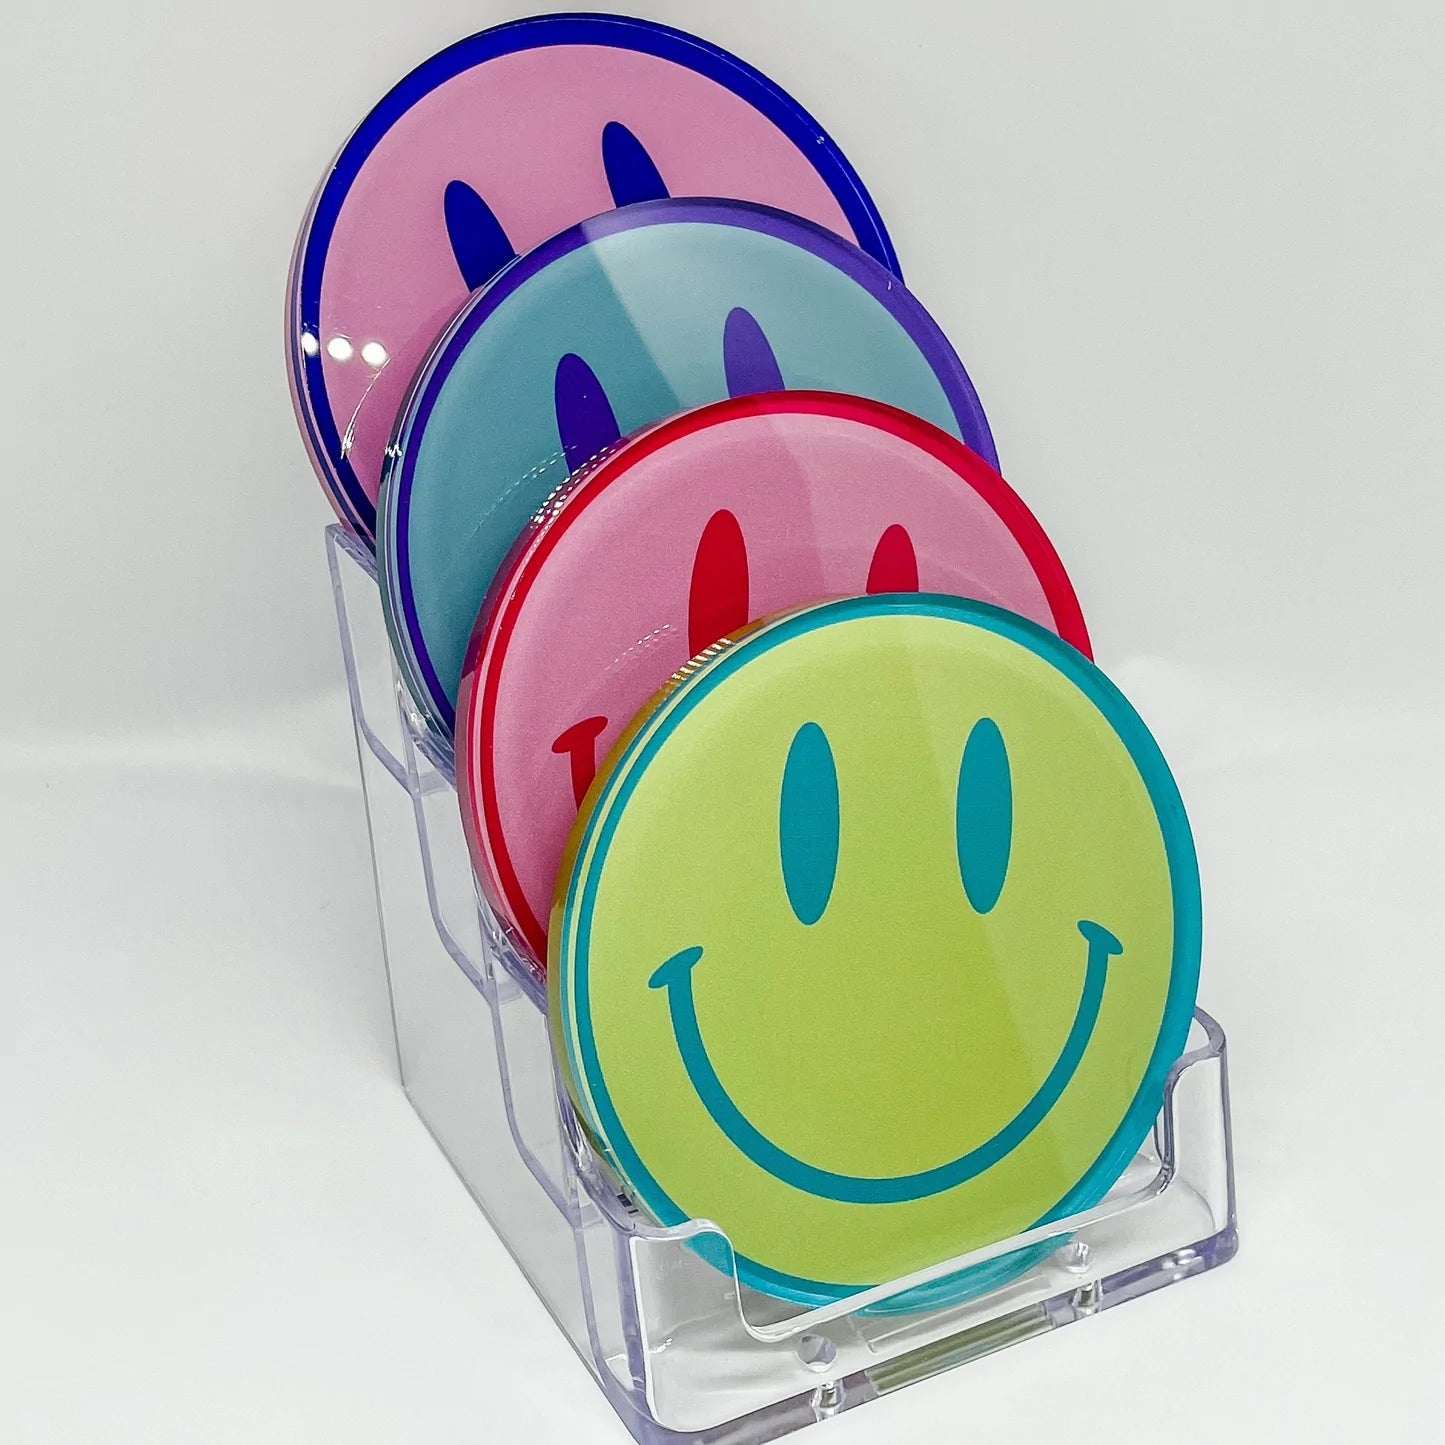 Acrylic Coasters: All Smiles